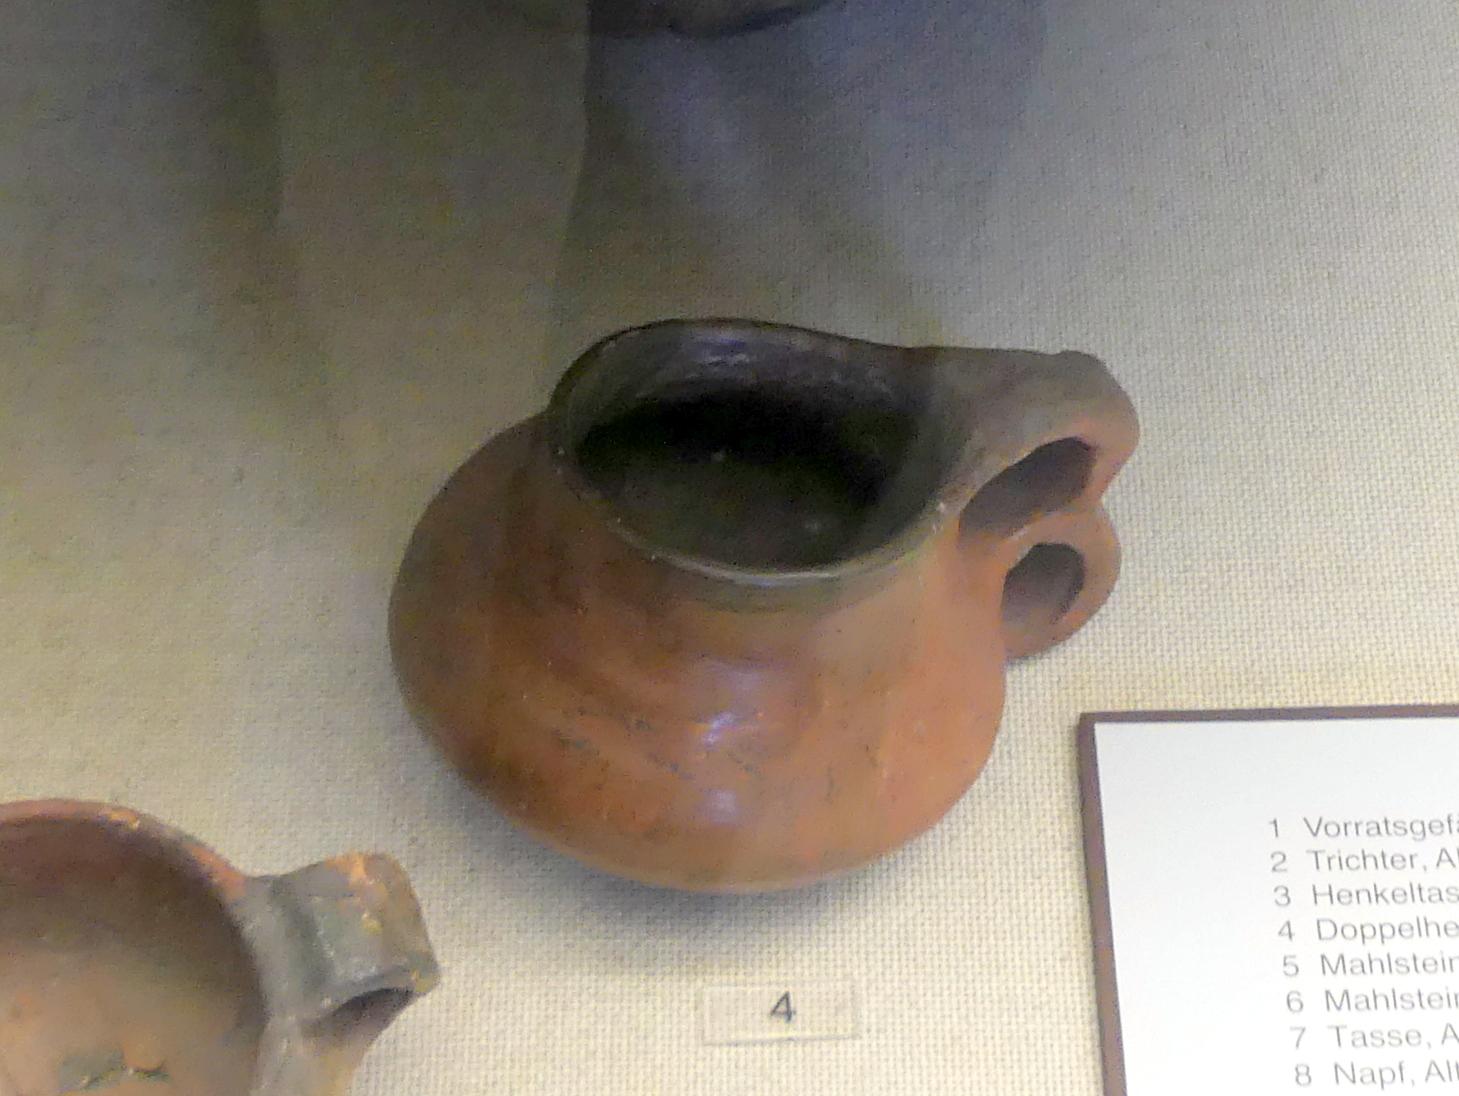 Doppelhenkeltasse, Hallstattzeit, 700 - 200 v. Chr., Bild 1/2